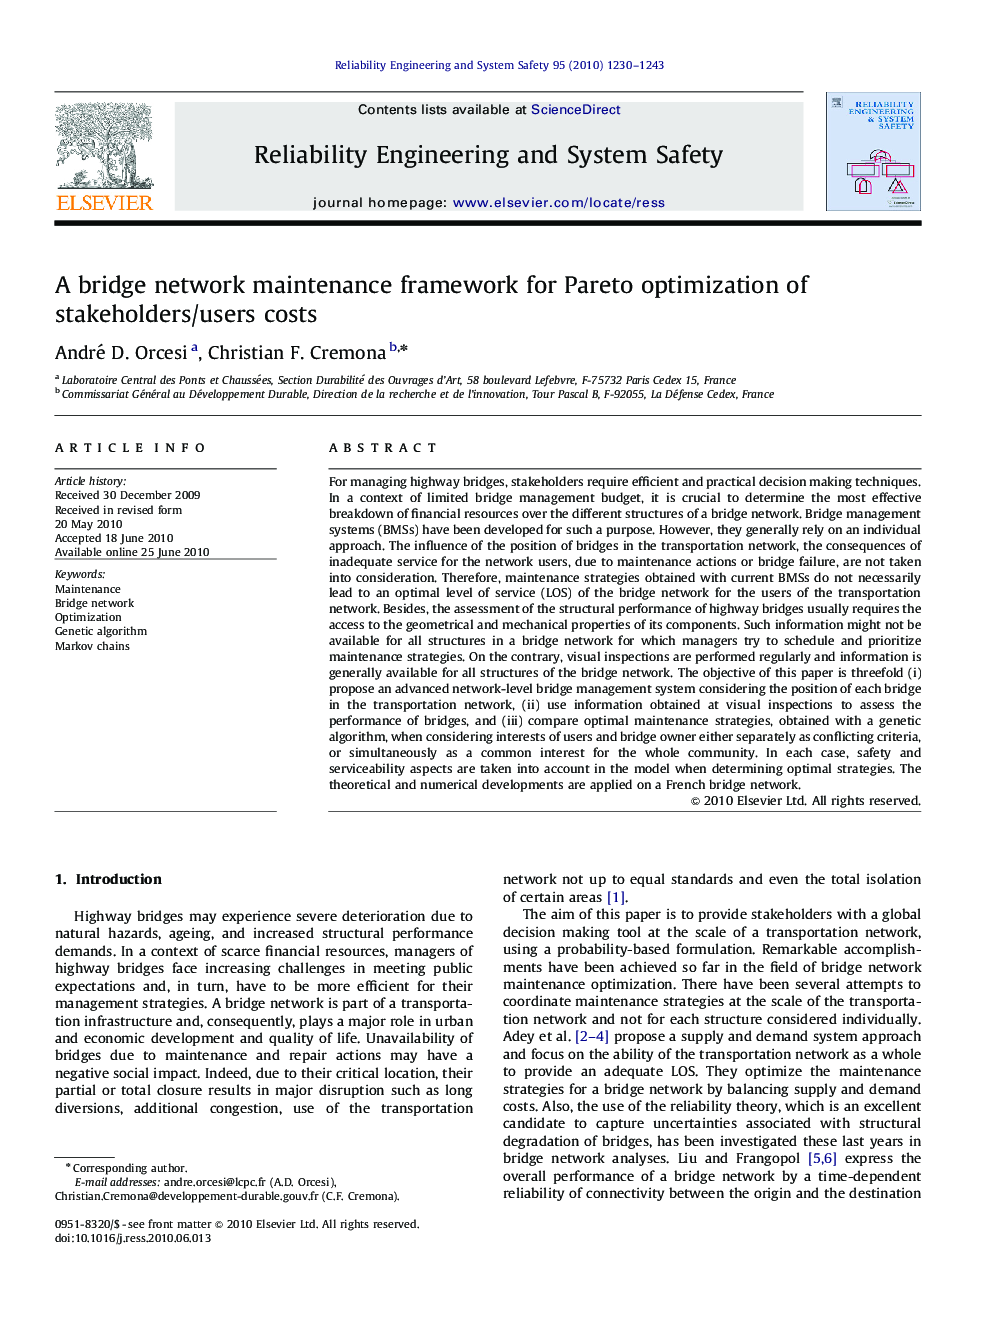 A bridge network maintenance framework for Pareto optimization of stakeholders/users costs